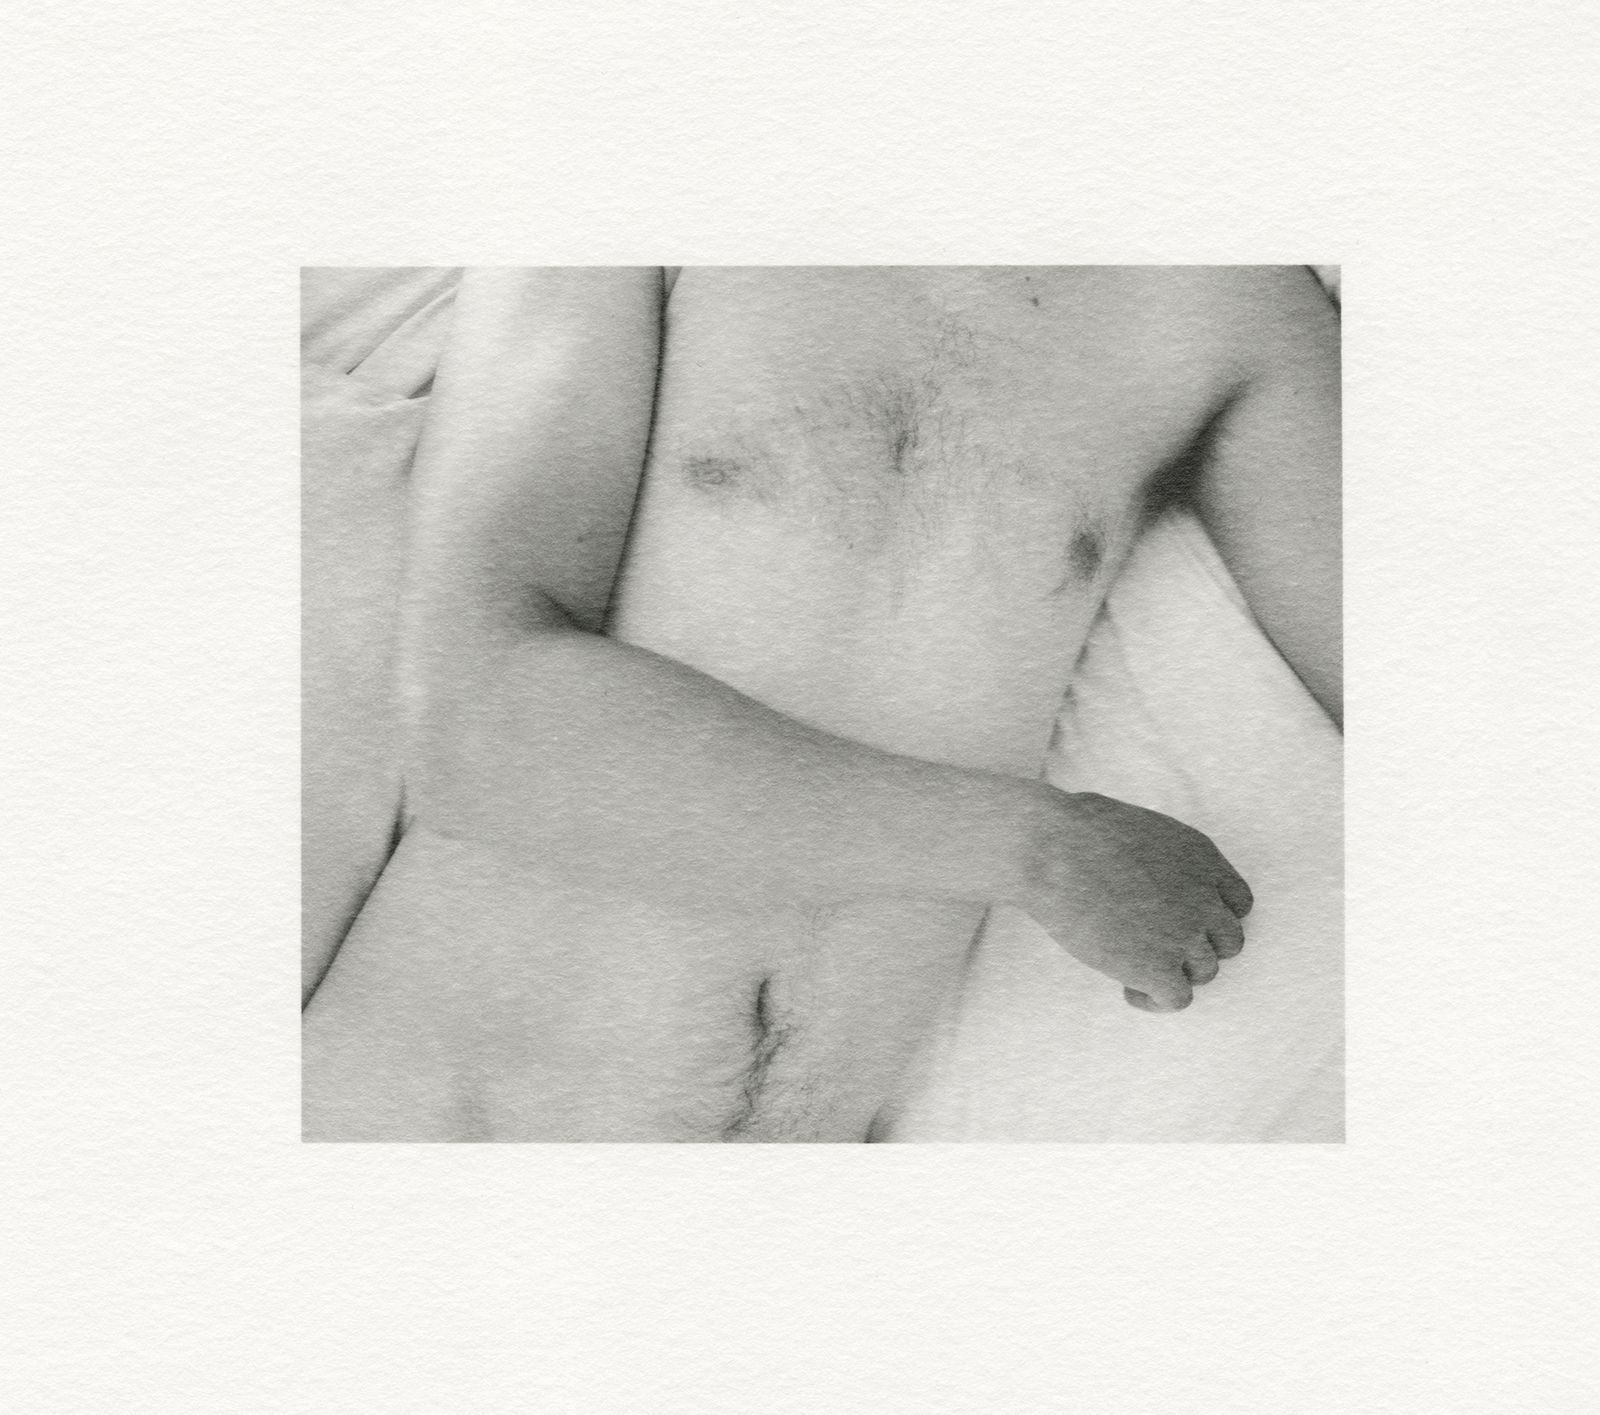 © Deanna Pizzitelli - Jakub, Bed, 2016 (Printed: 2018), Toned Silver Gelatin Print © Deanna Pizzitelli / Courtesy of Stephen Bulger Gallery